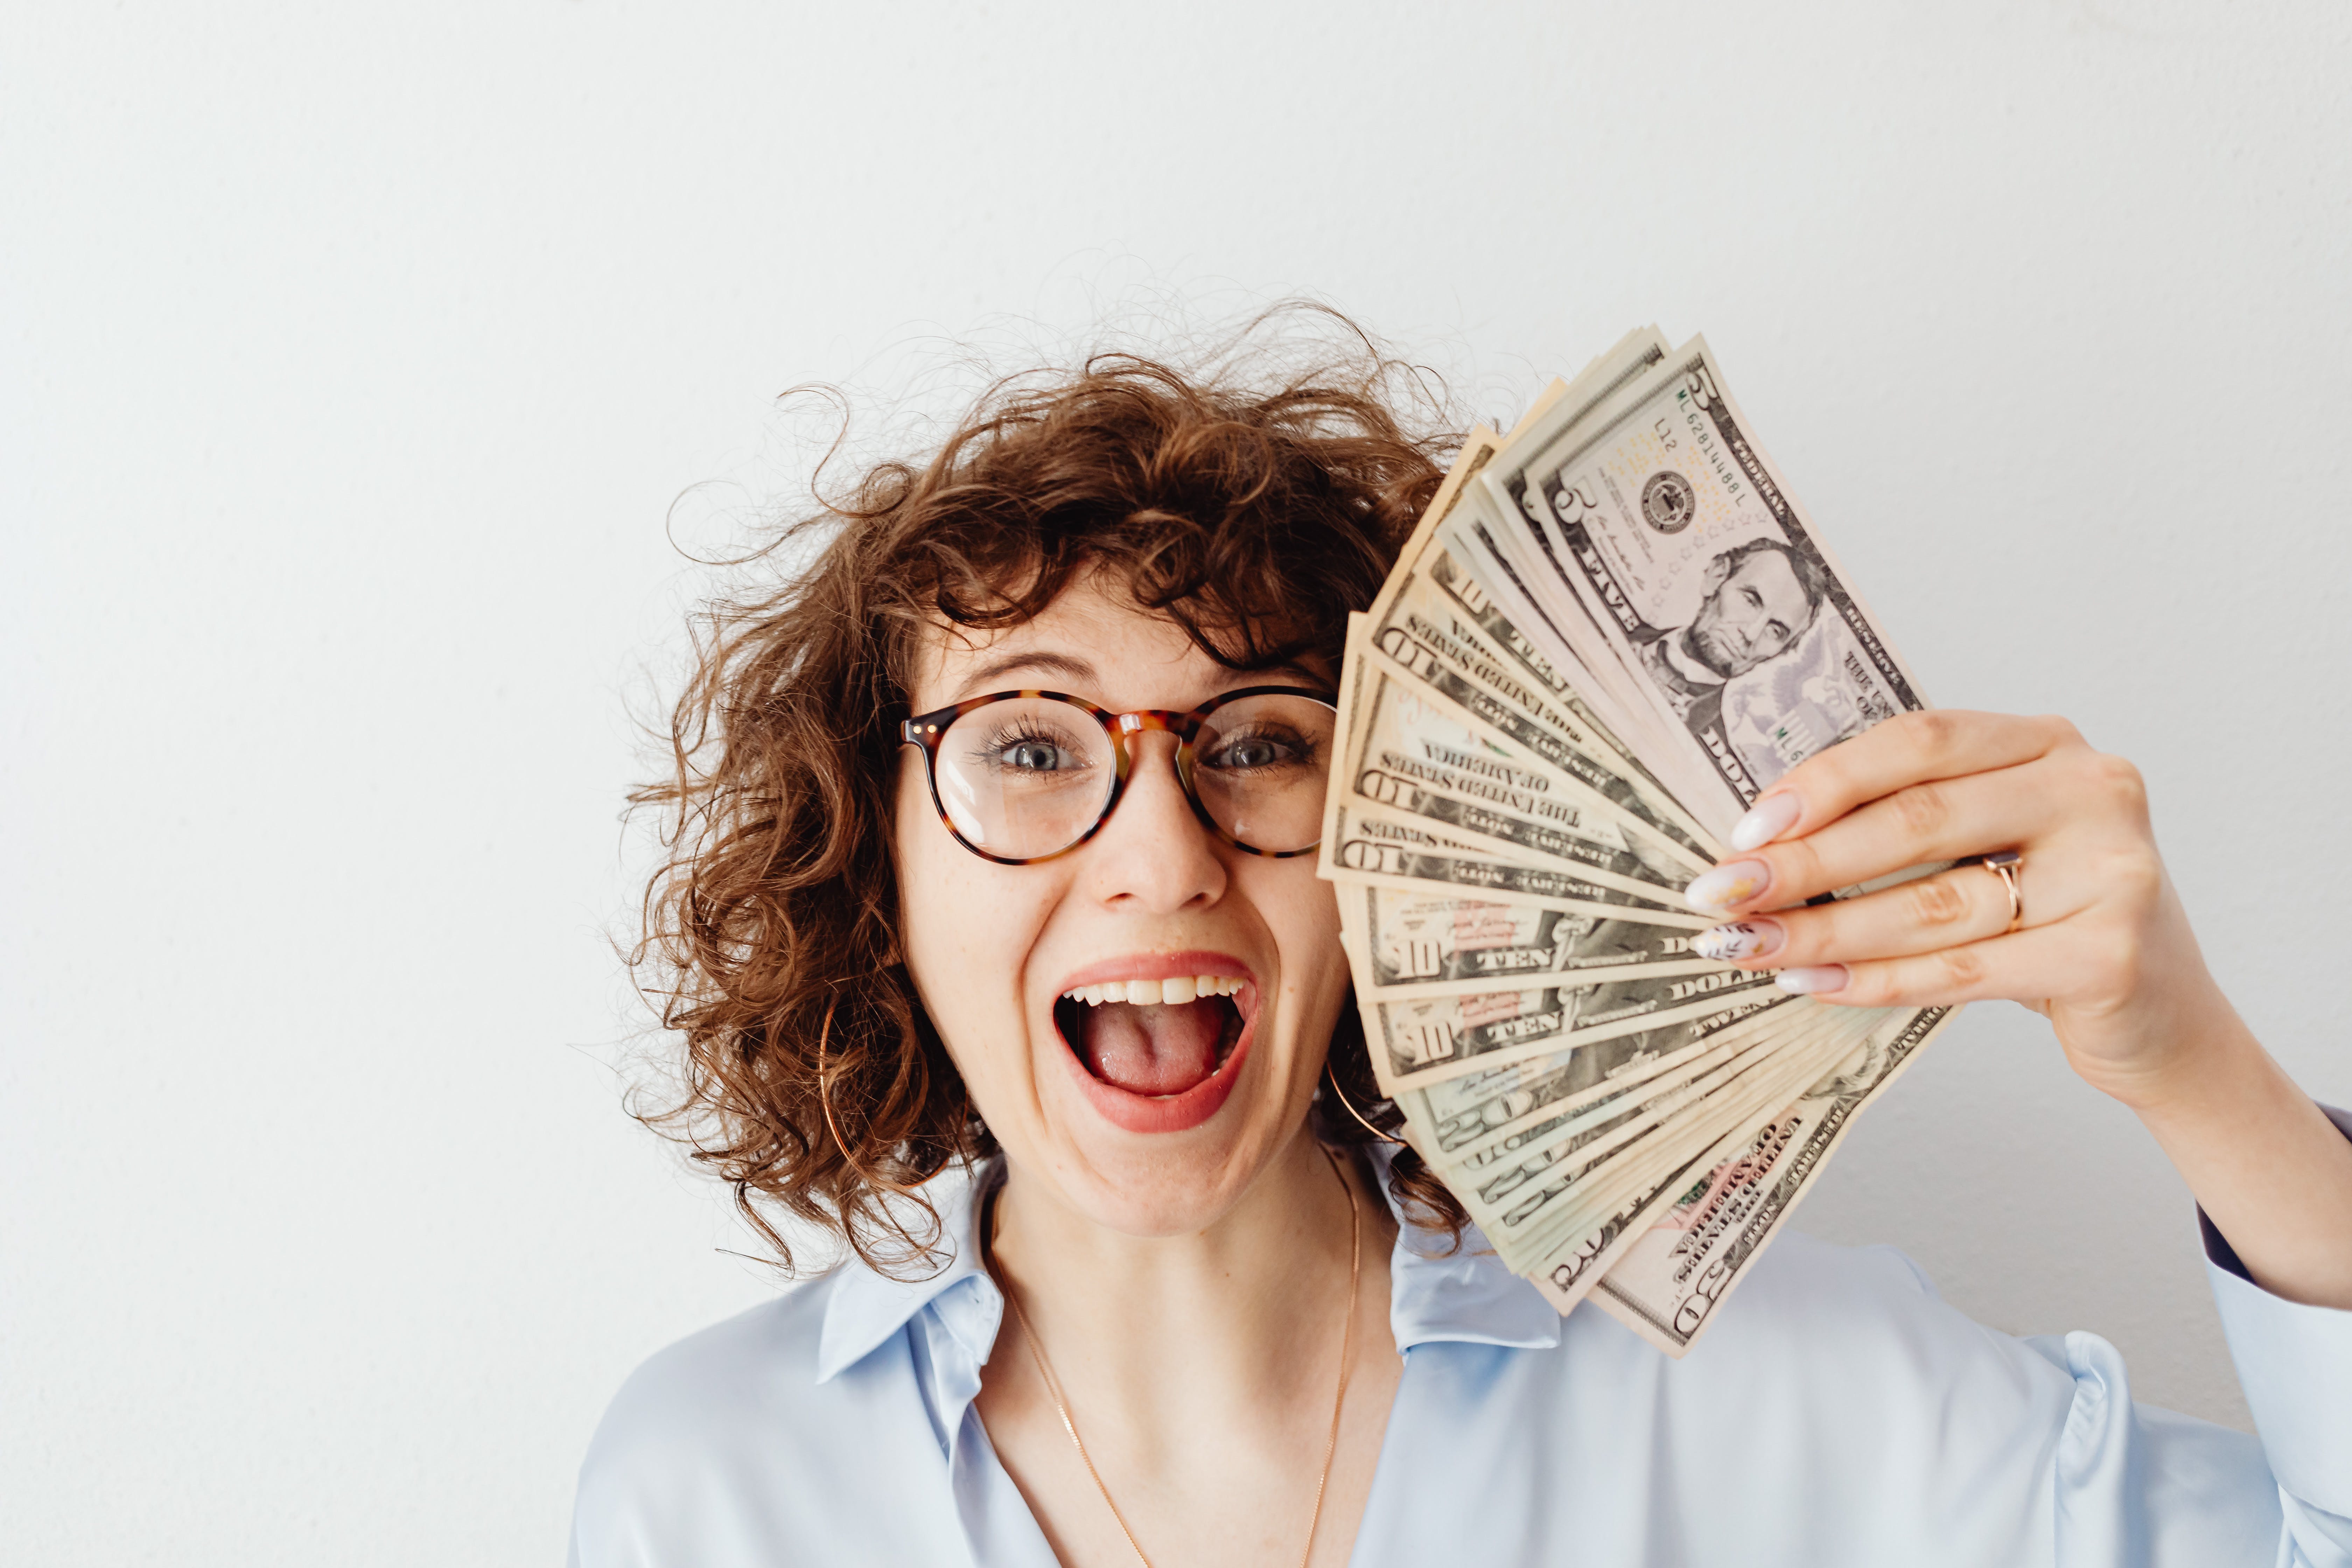 Woman fans herself with money bills | Source: Pexels